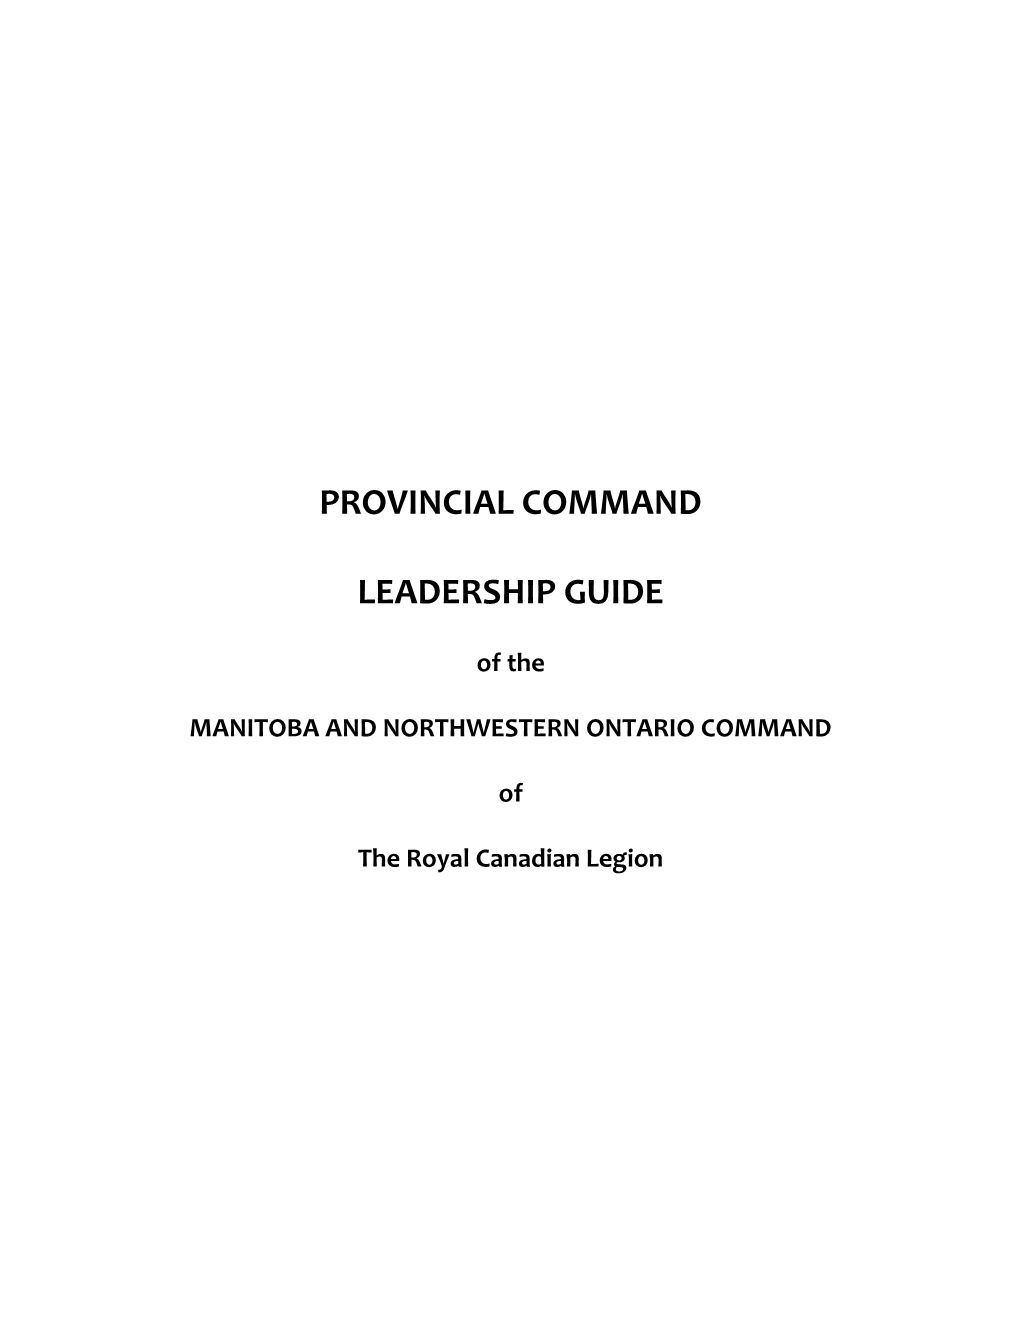 Manitoba and Northwestern Ontario Command